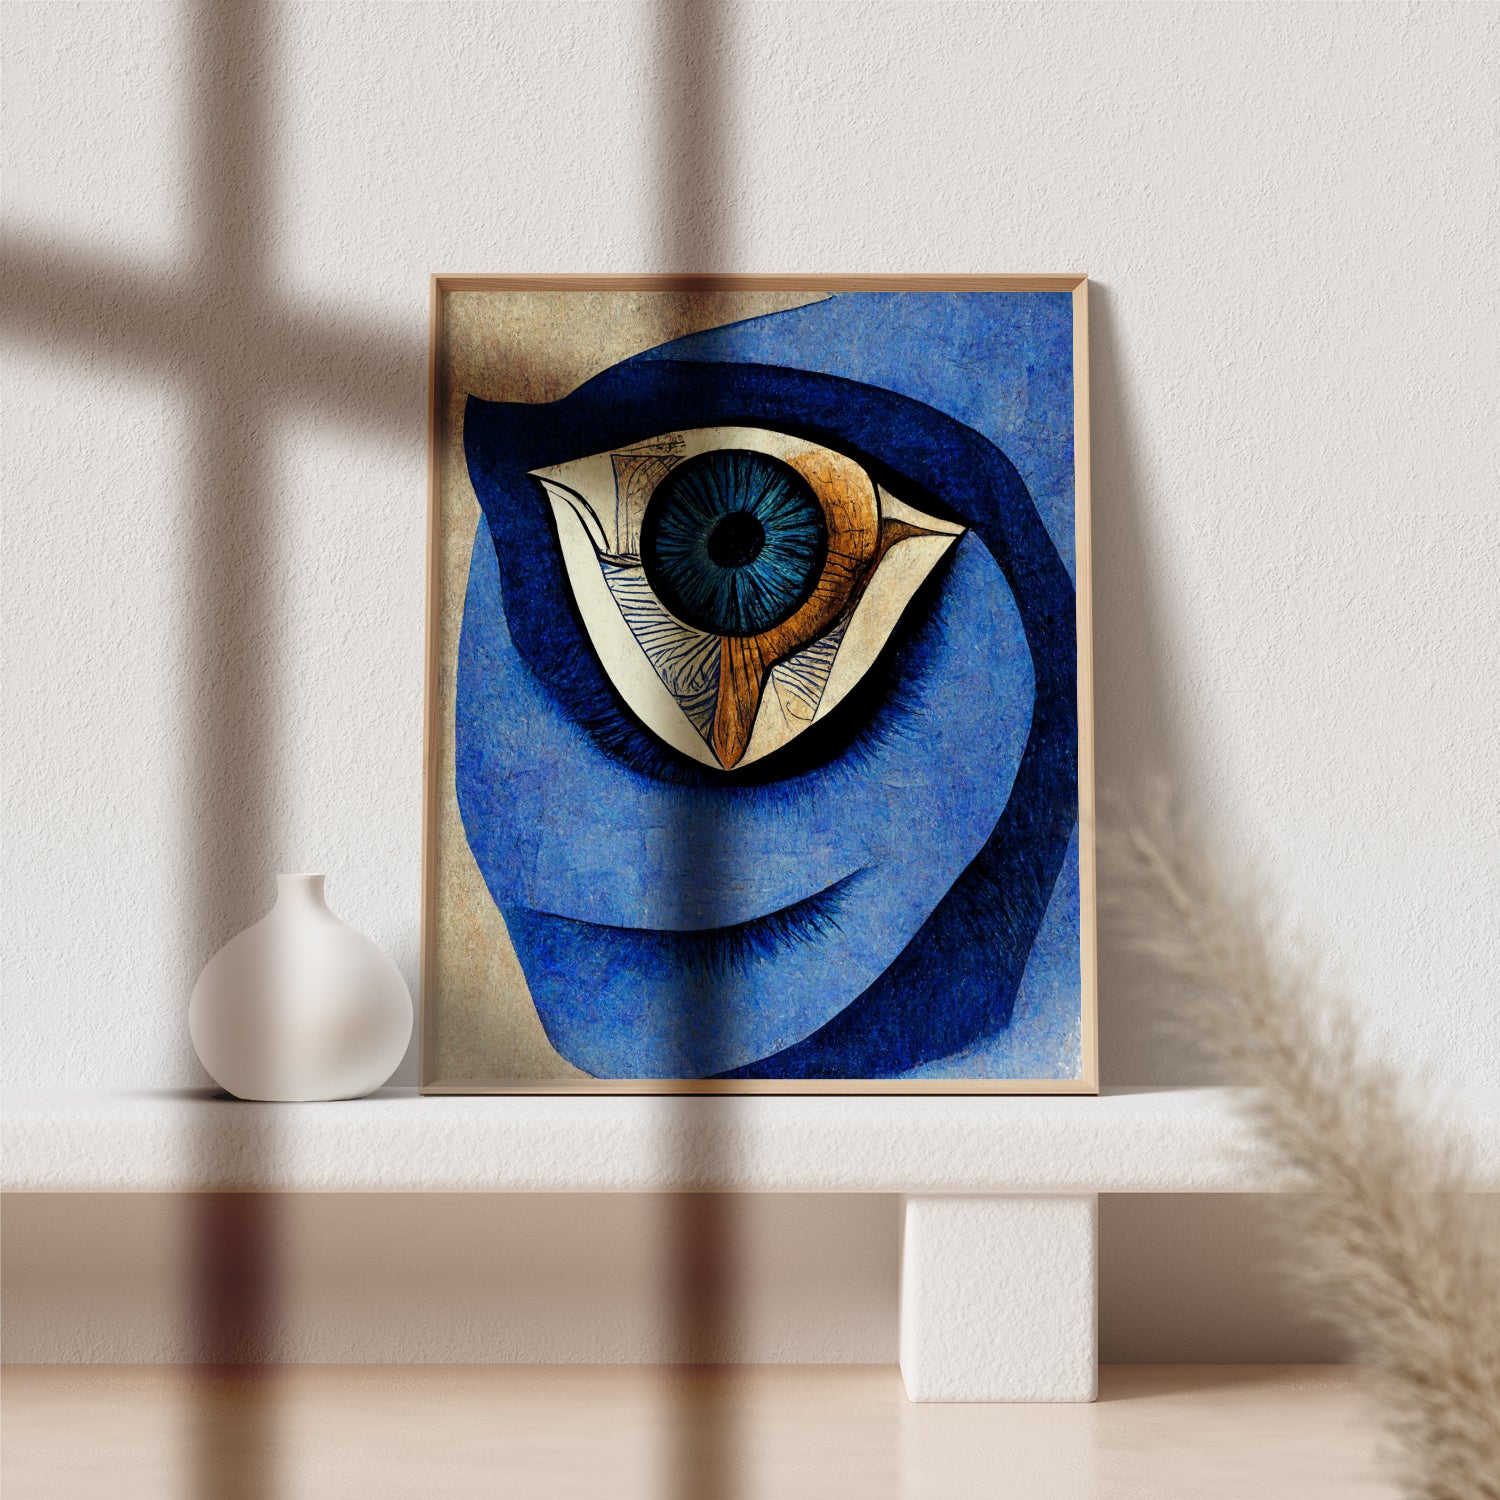 Medical Artwork - Eye Clinic Wall Art Featuring Iris Anatomy